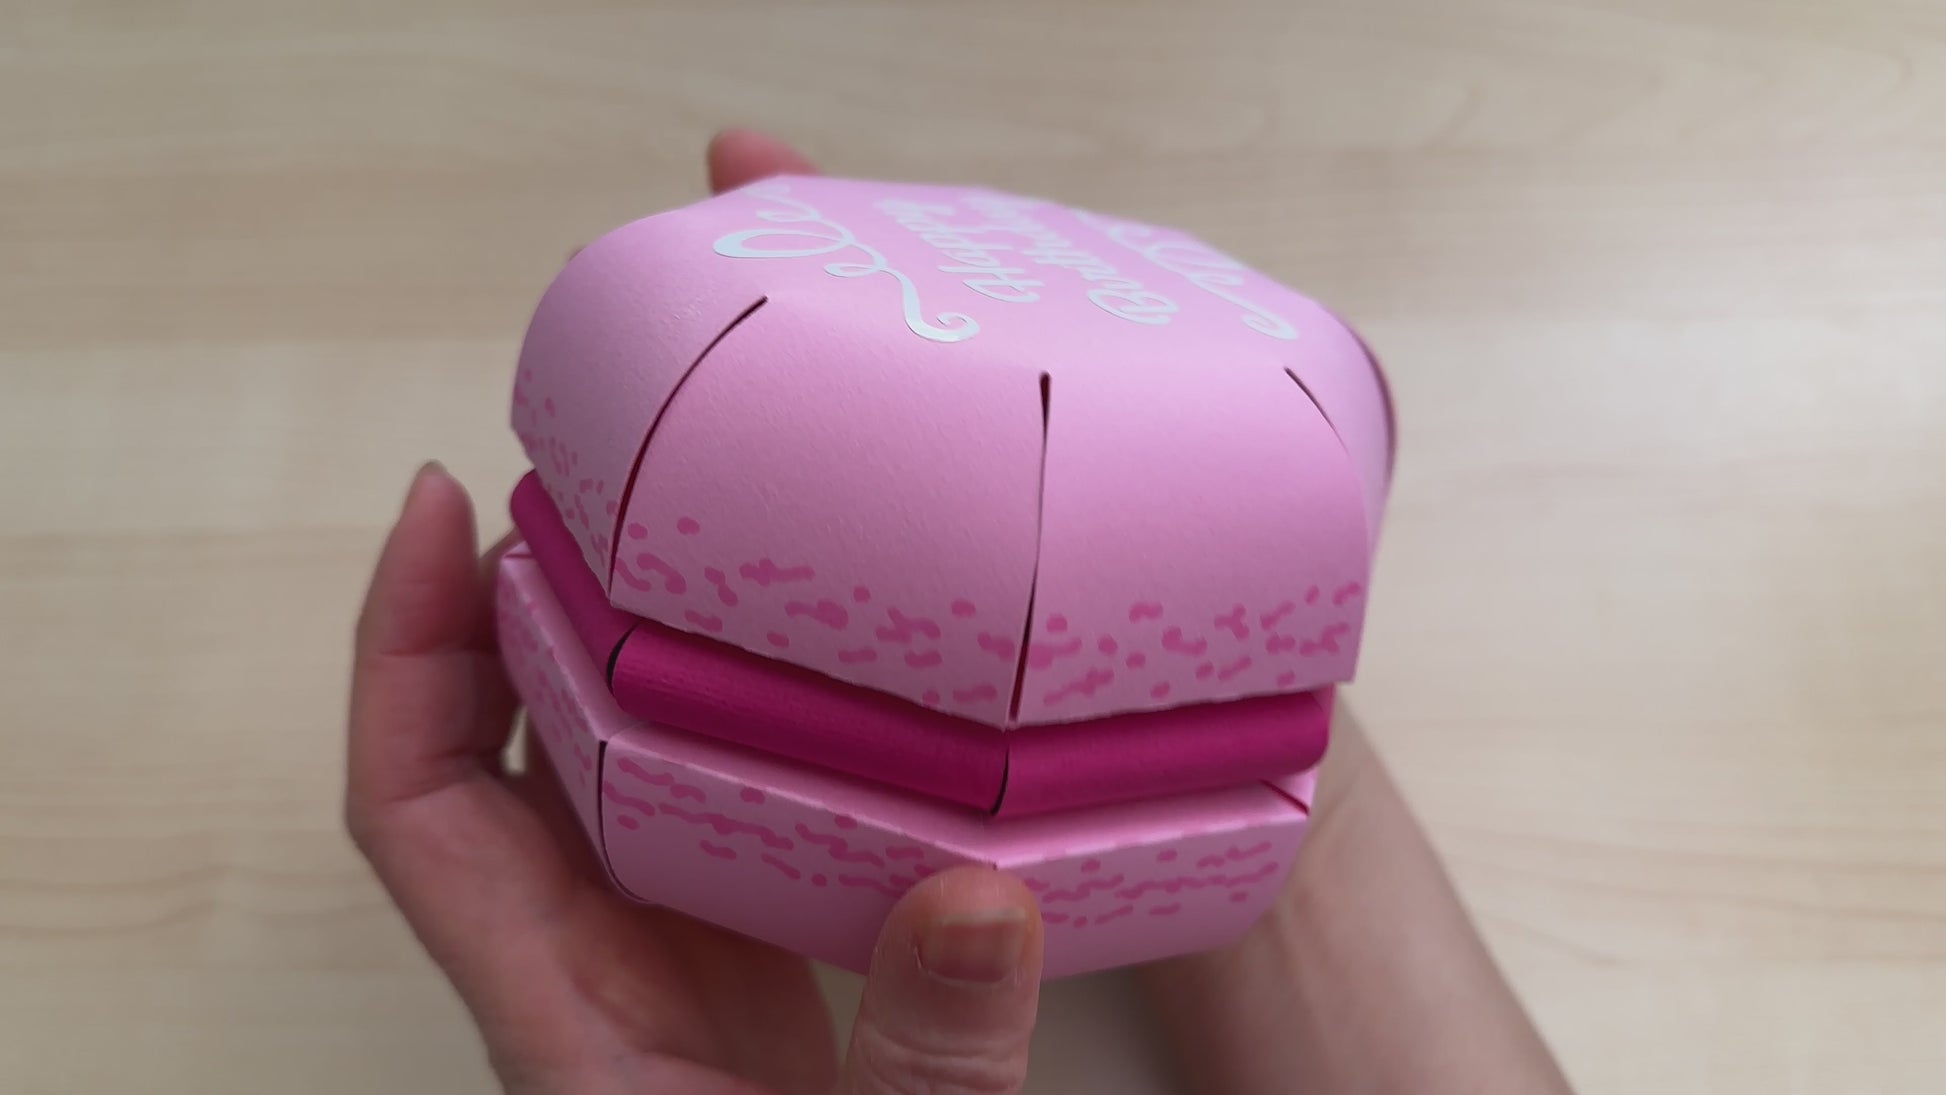 Macaron Gift Box 3D SVG Birthday Cake